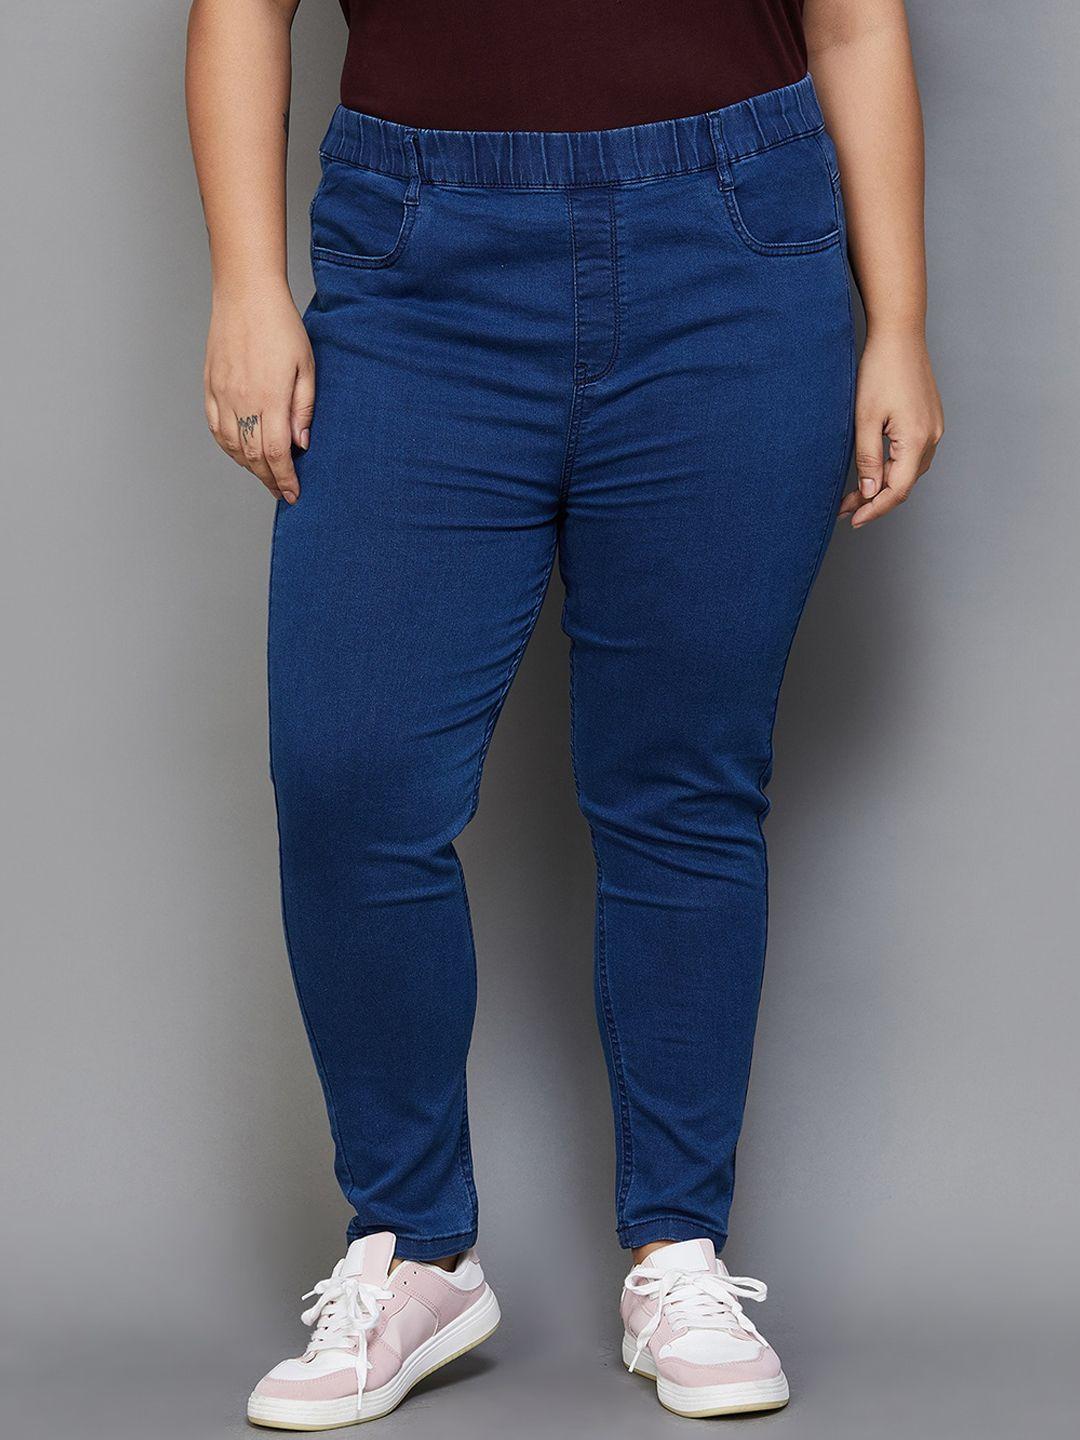 nexus by lifestyle women plus size mid-rise clean look jeans